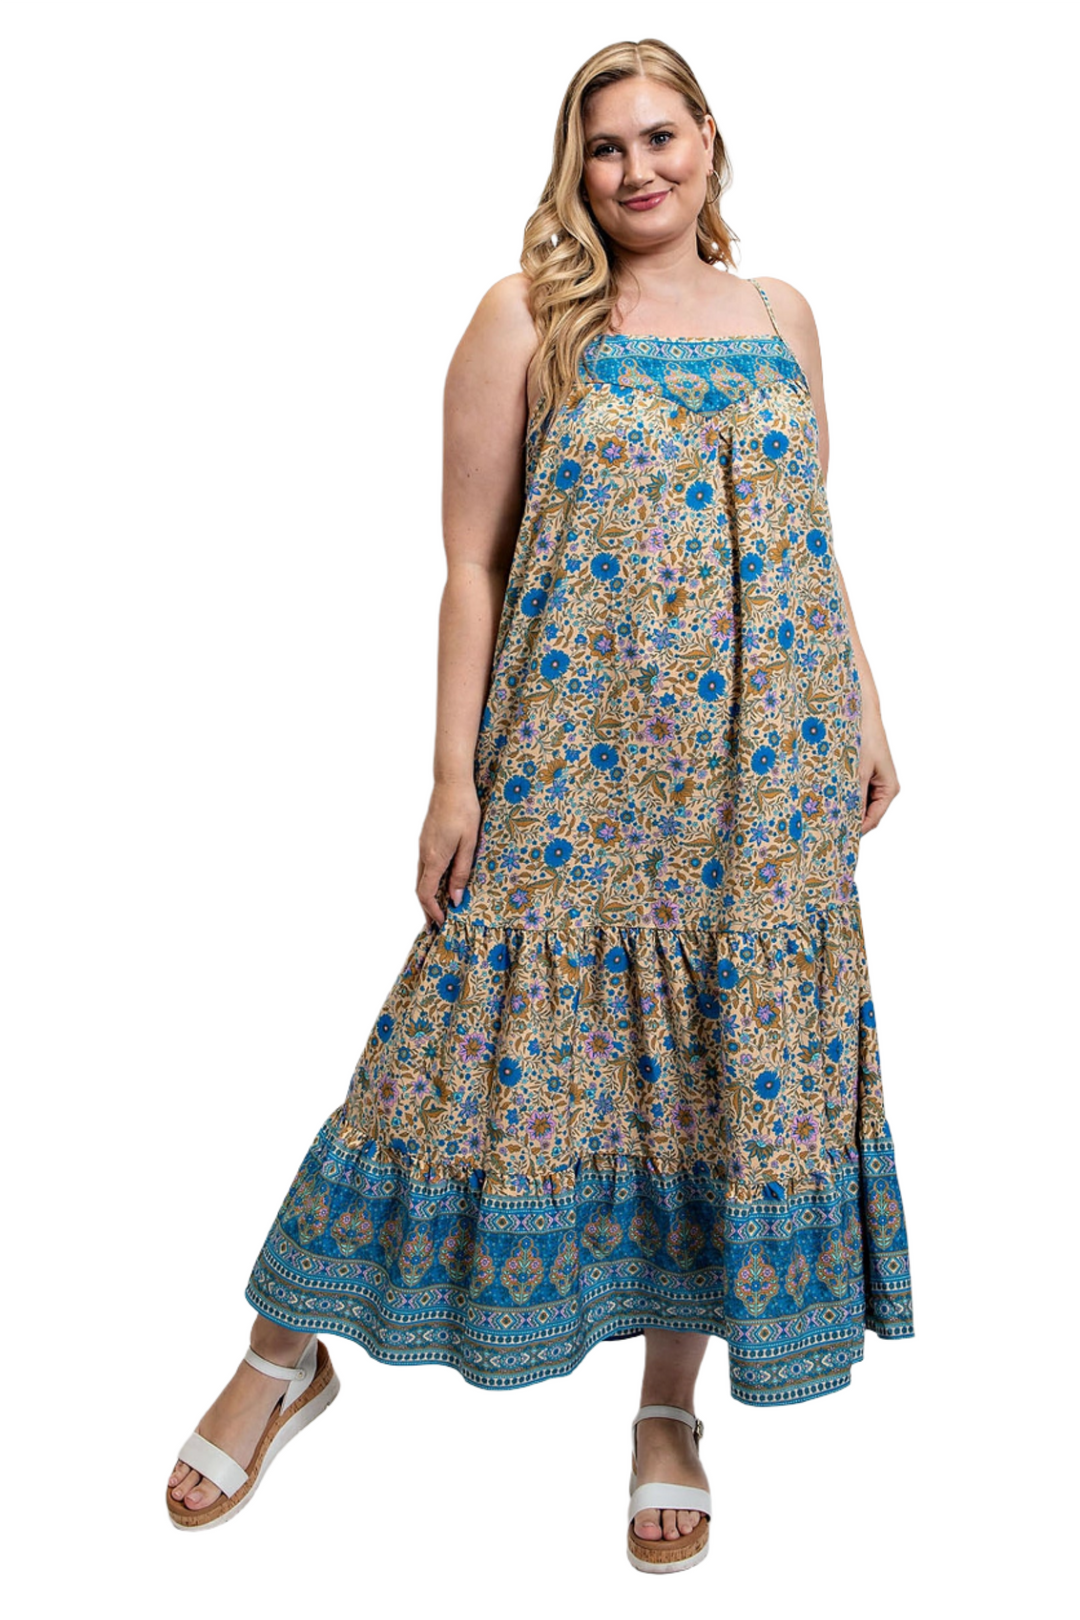 Floral & Aztec Print Spaghetti Strap Maxi Dress - XL, 1XL, 2XL